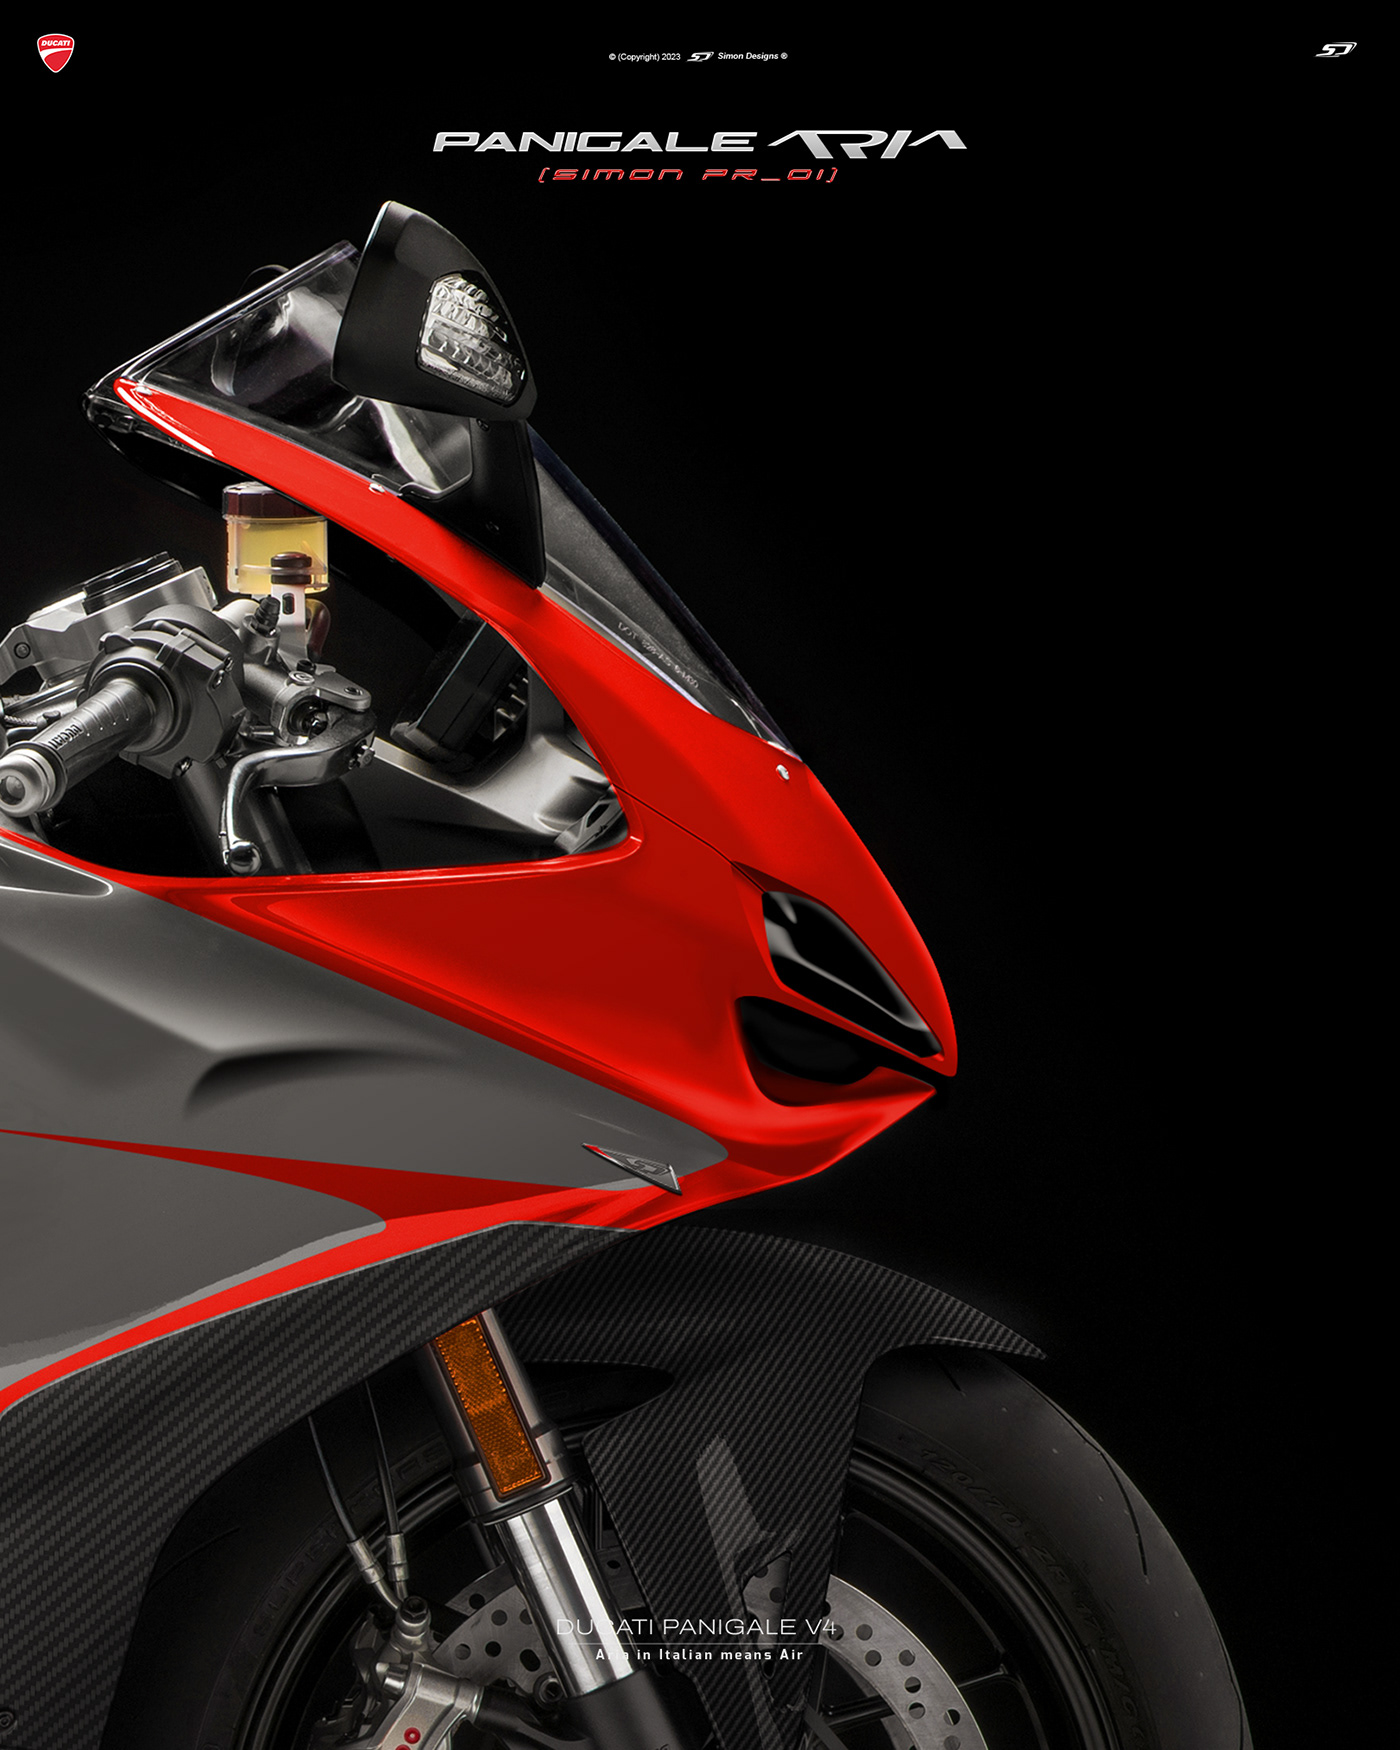 Simon Designs designer motorcycle art Ducati ducari panigale aria Ducati Panigale panigale aria